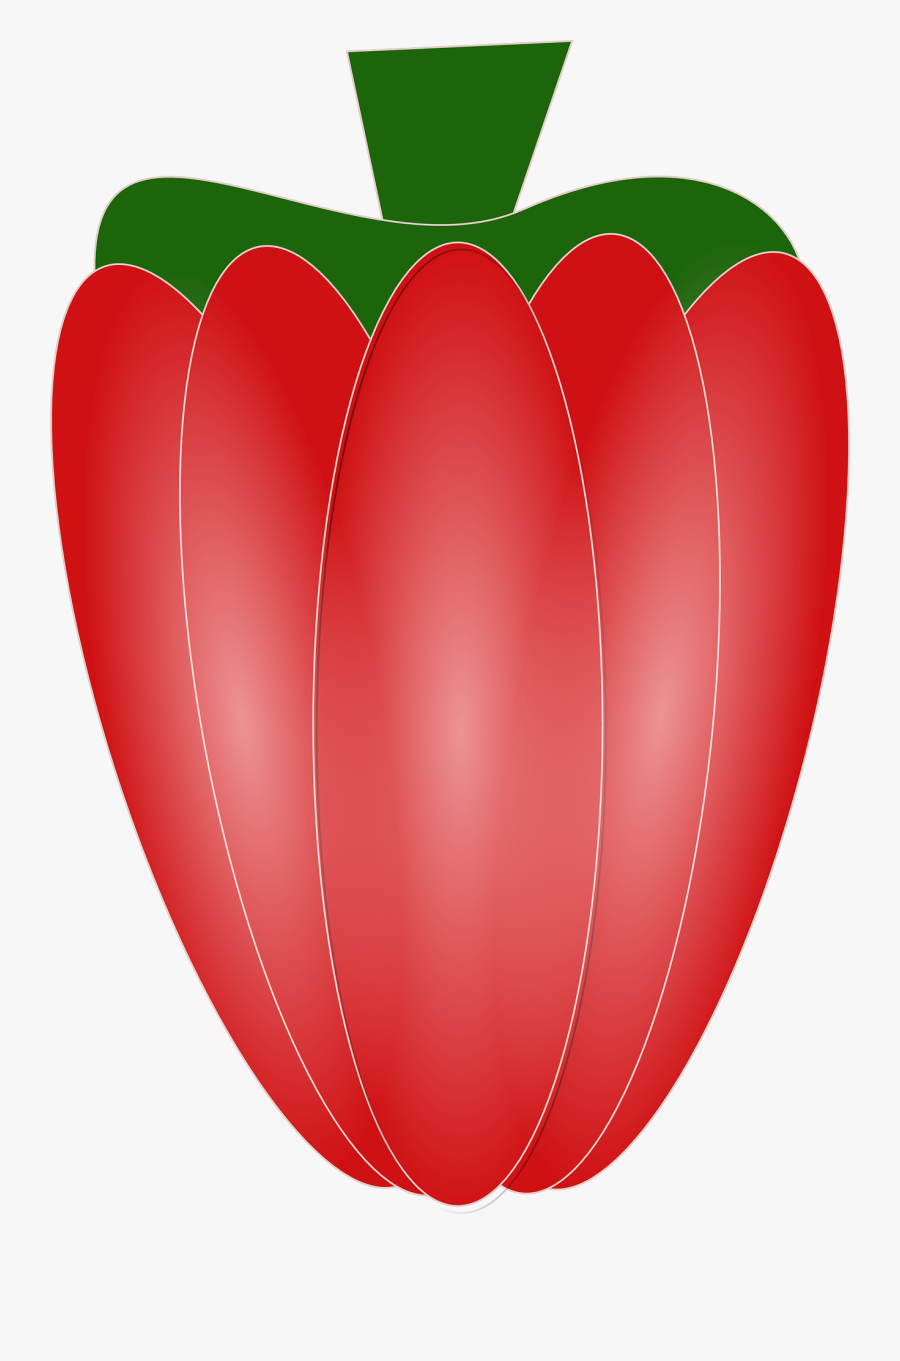 Red Pepper - Clip Art, Transparent Clipart